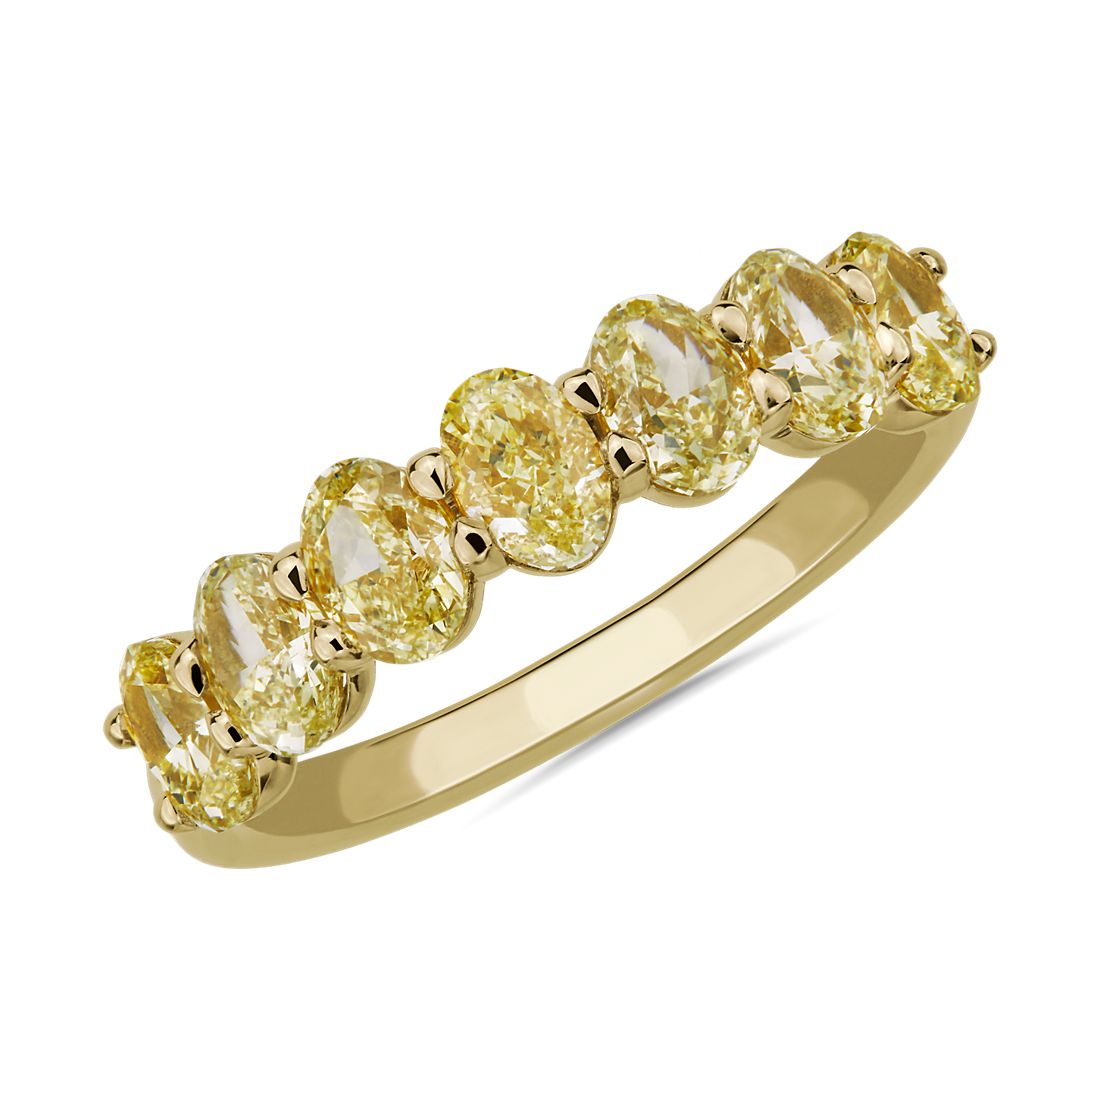 7-Stone Oval Yellow Diamond Ring in 18k Yellow Gold (1 3/4 ct. tw.)